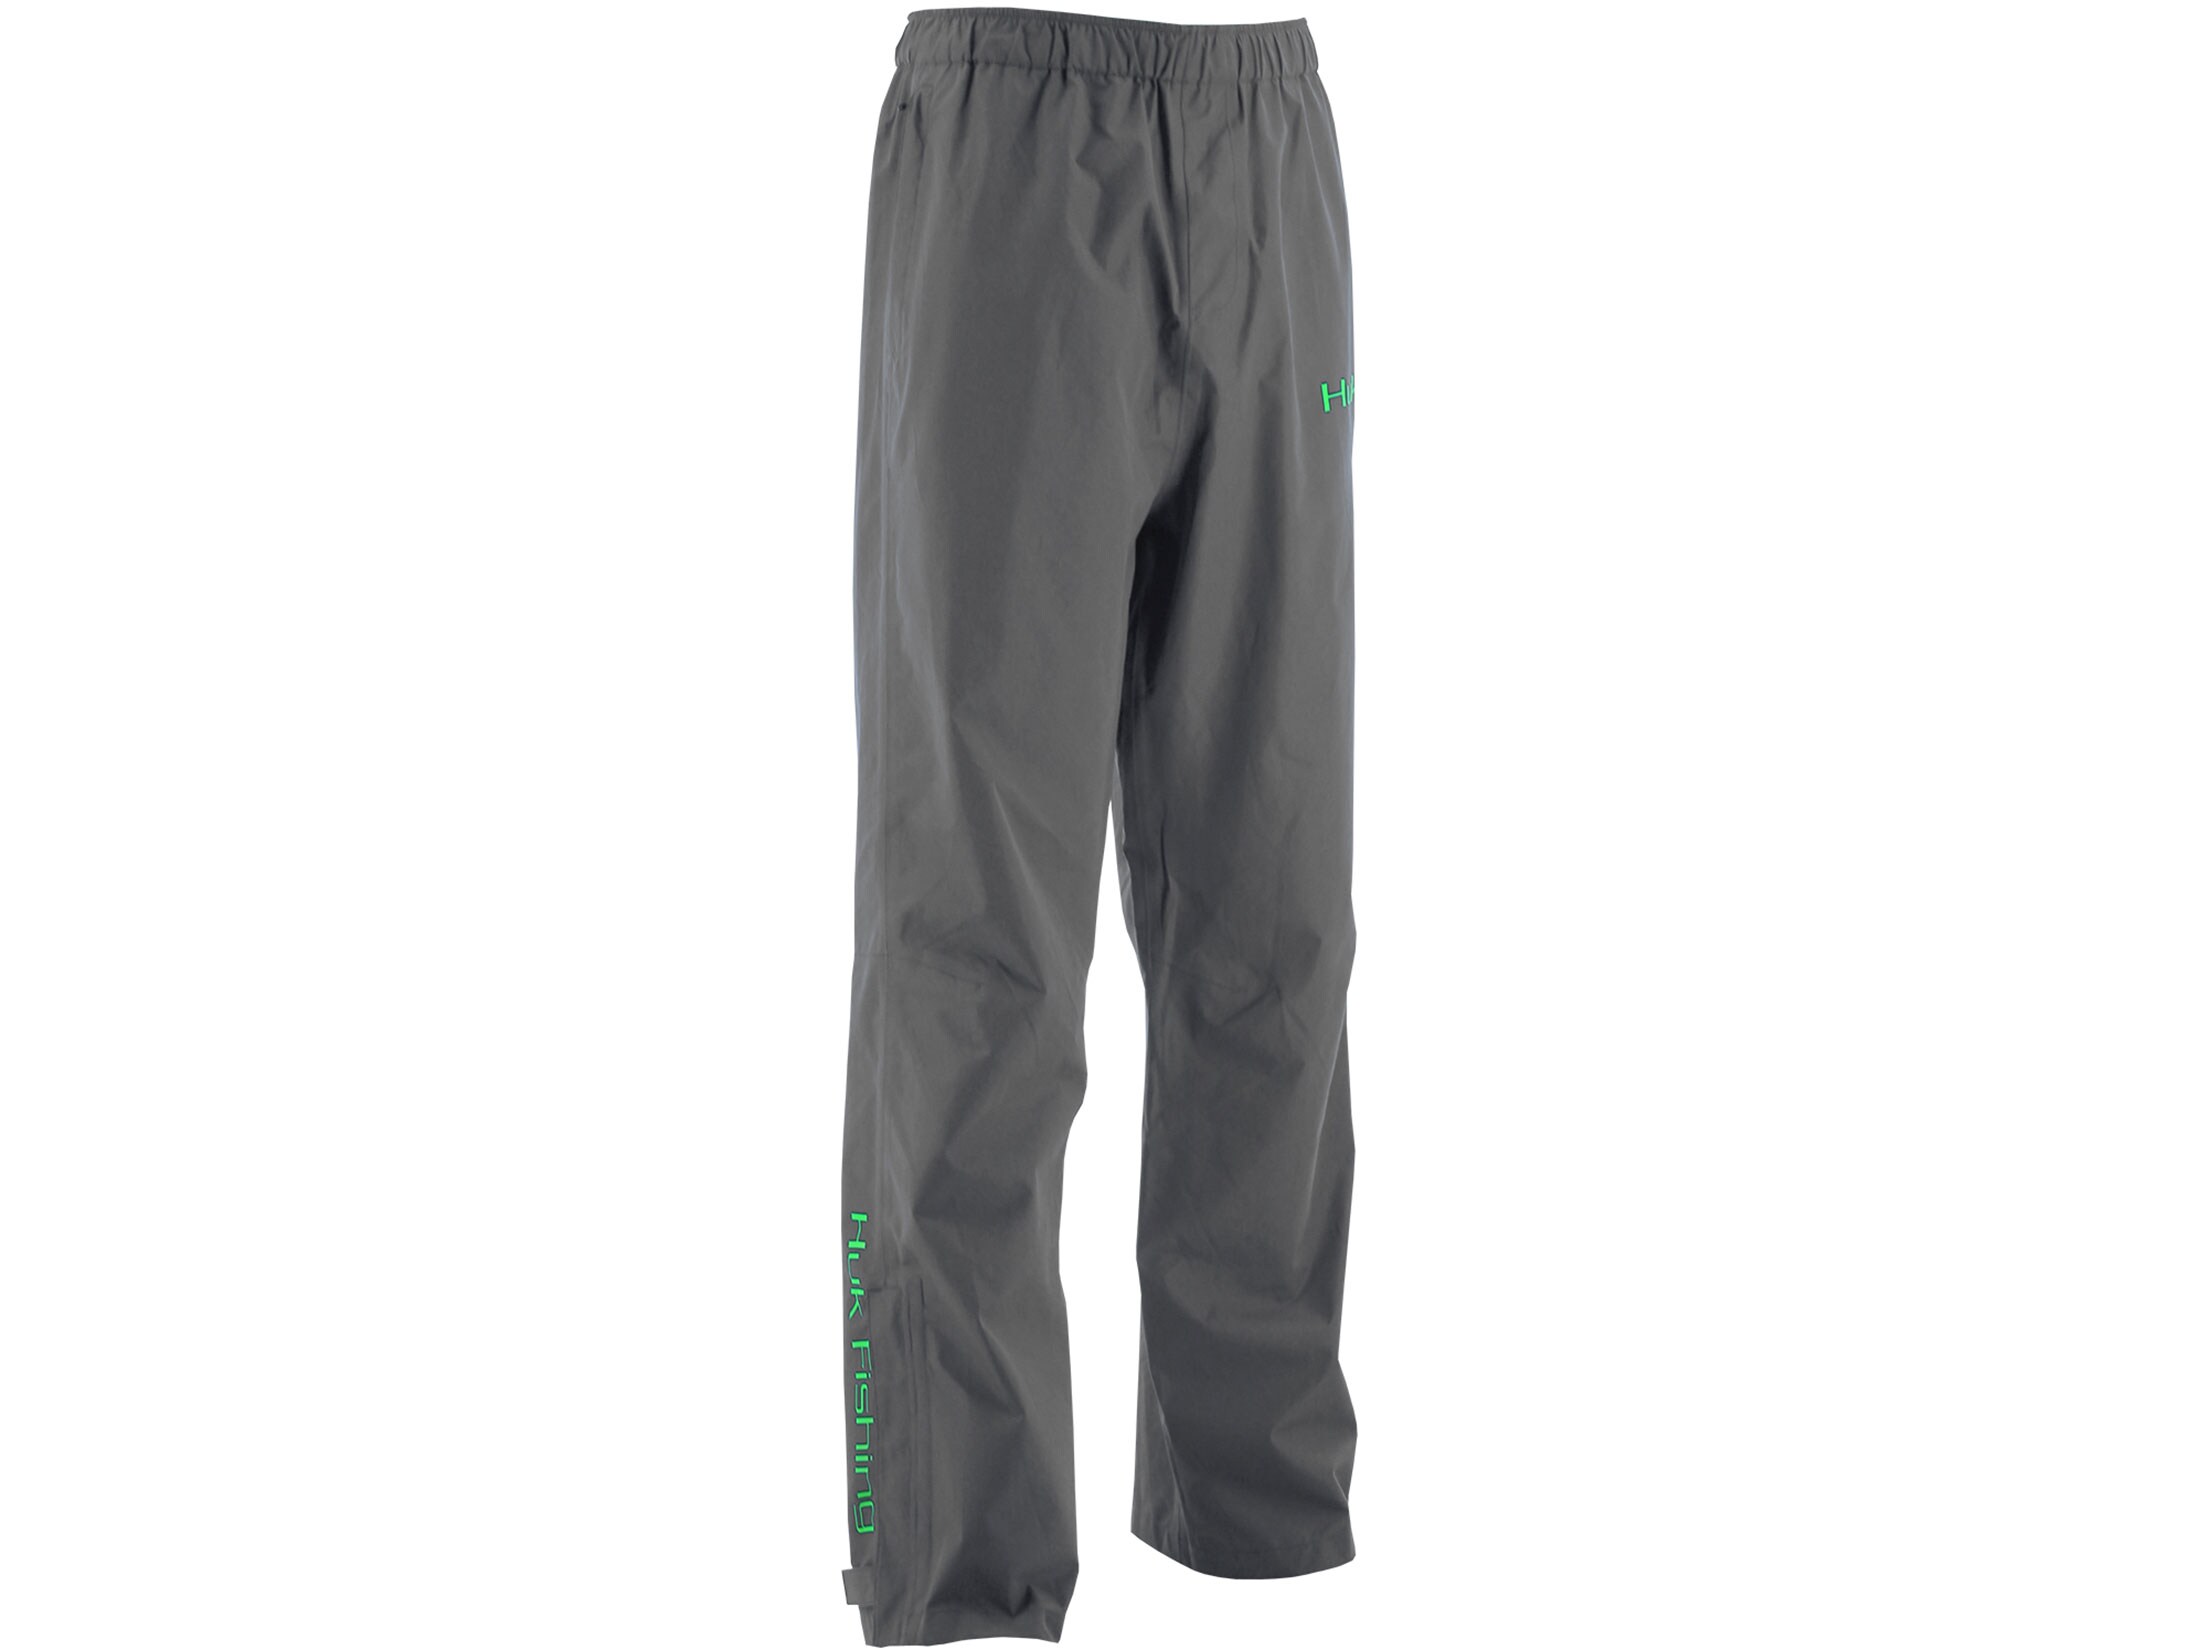 Huk Men's Waterproof Packable Rain Pants Polyester Cool Charcoal Gray